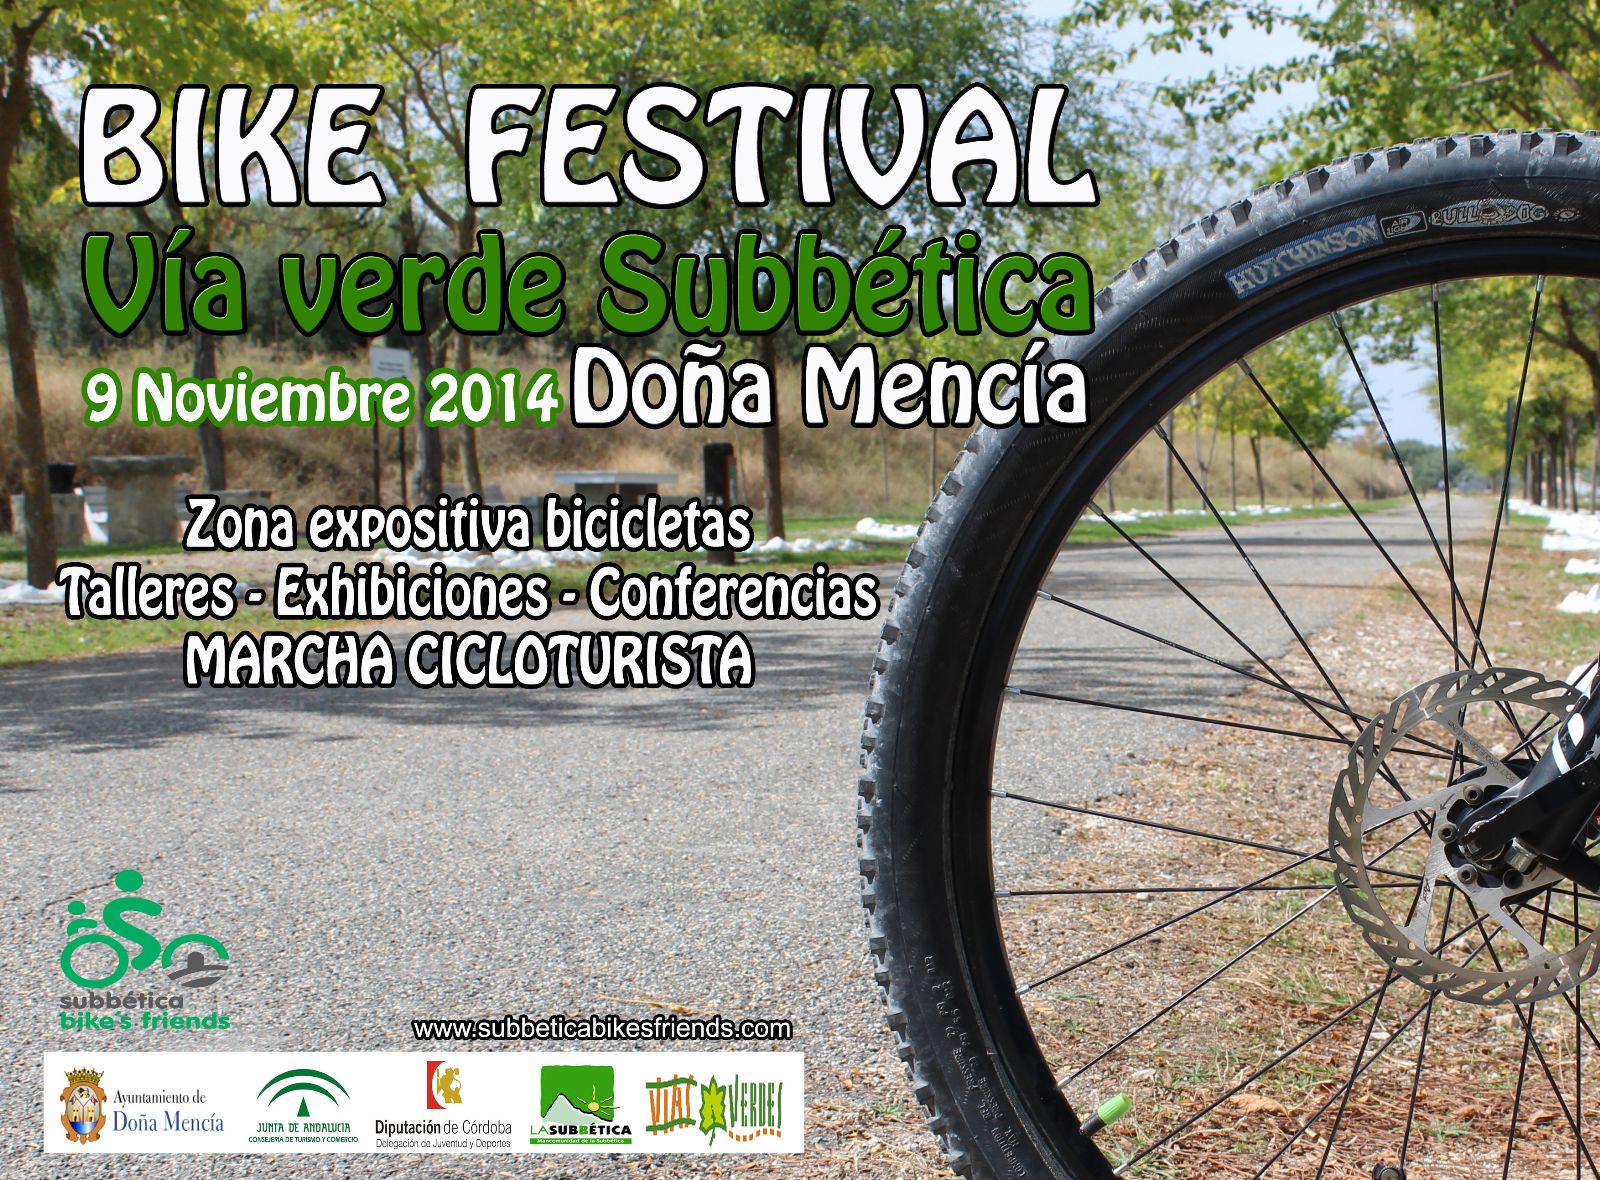 Bike Festival Va Verde de la Subbtica (Crdoba)